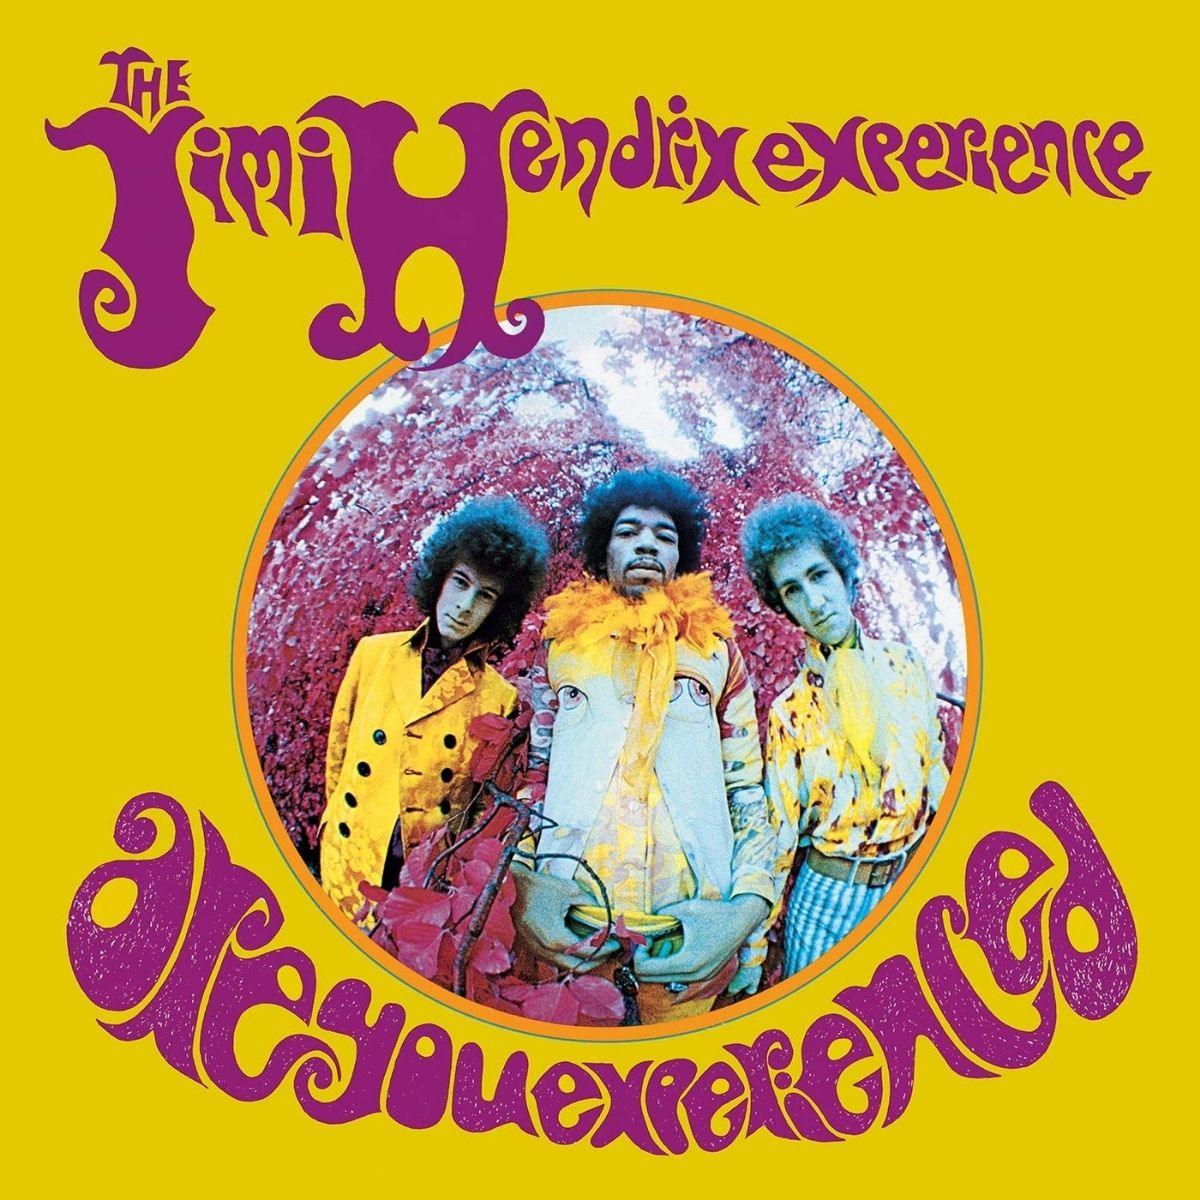 Обложка альбома Jimi Hendrix (Джими Хендрикса) «Are You Experience» (1967)